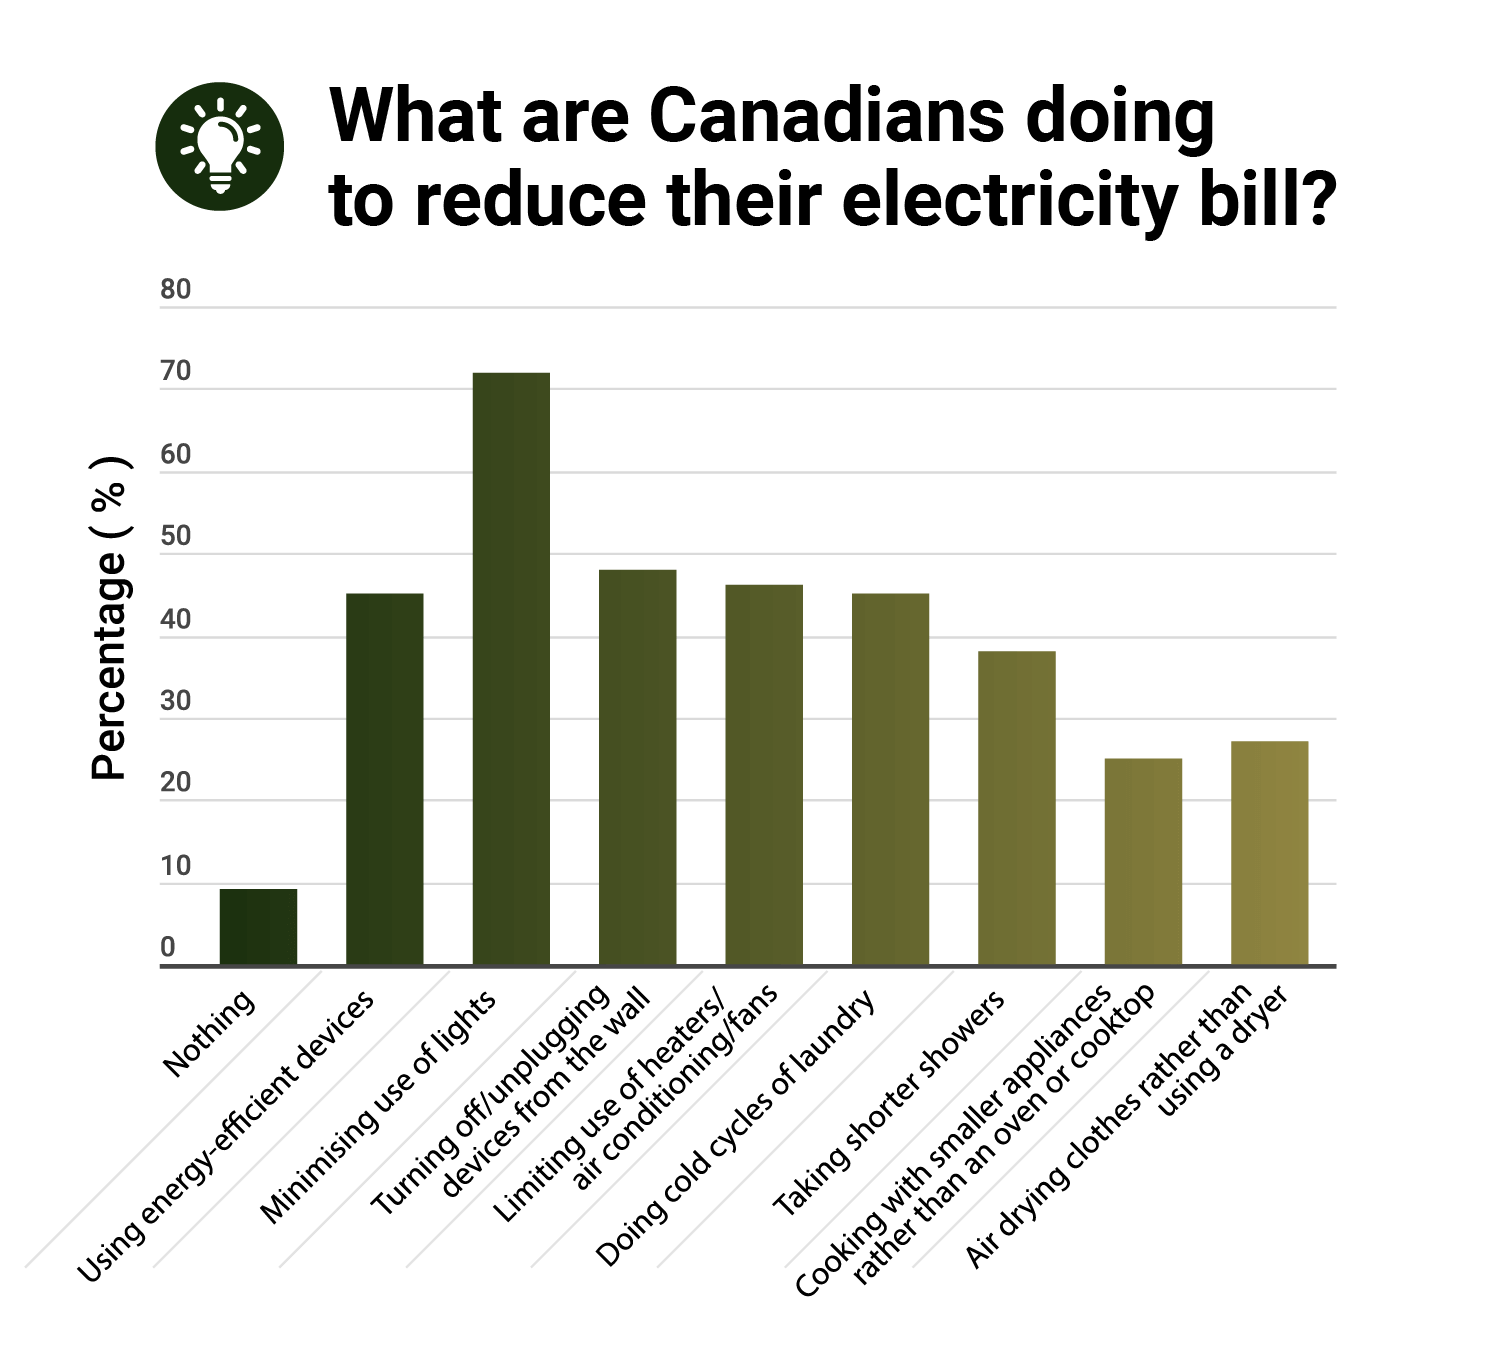 A bar chart showing how Canadians combat electricity bills